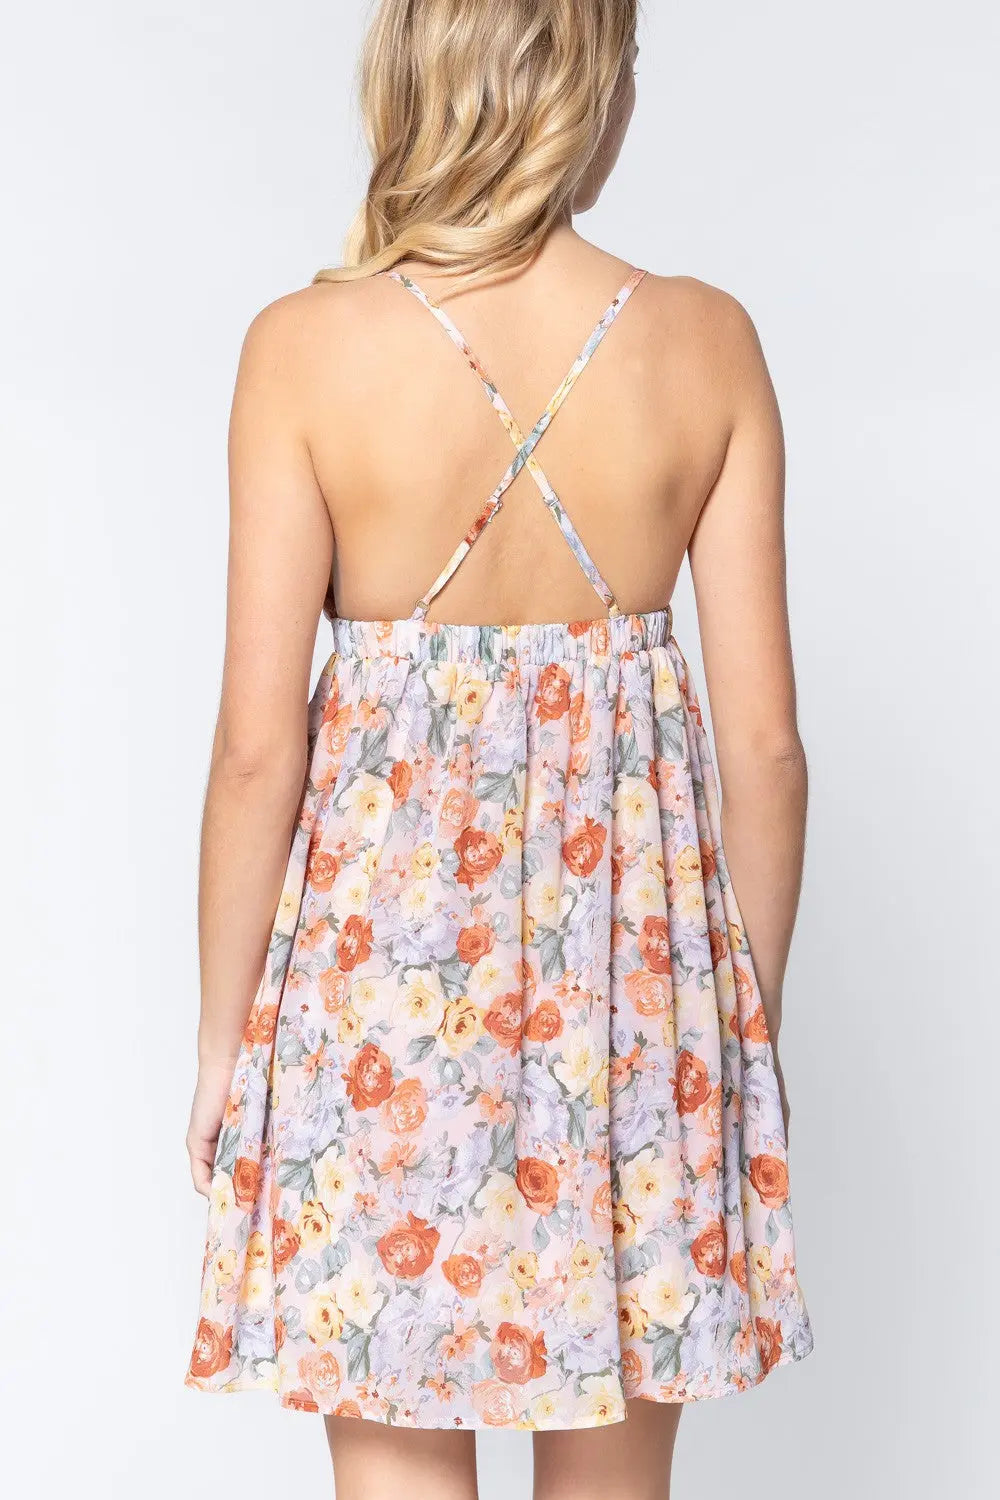 V-neck Open Back Floral Mini Dress Sunny EvE Fashion